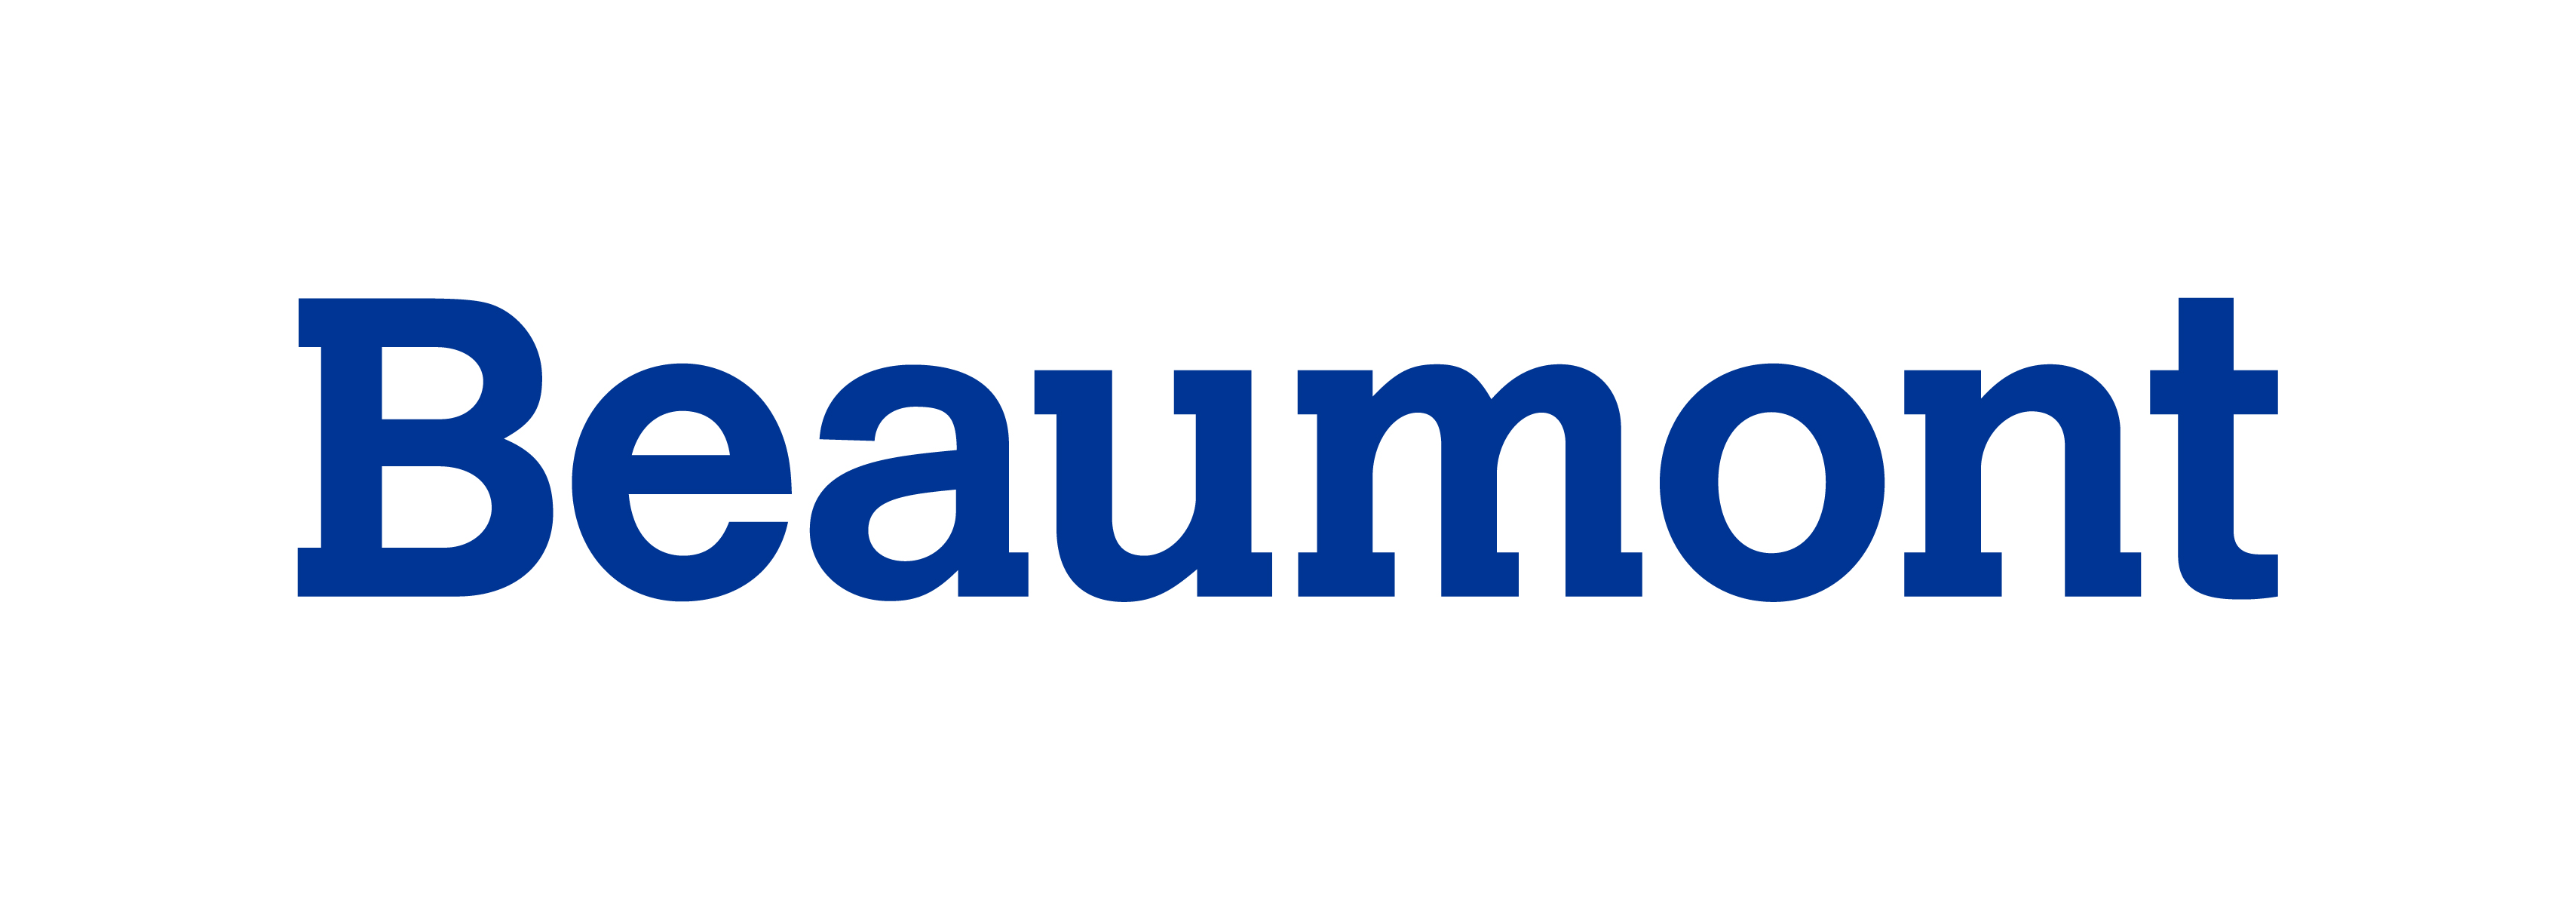 Beaumont Careers logo